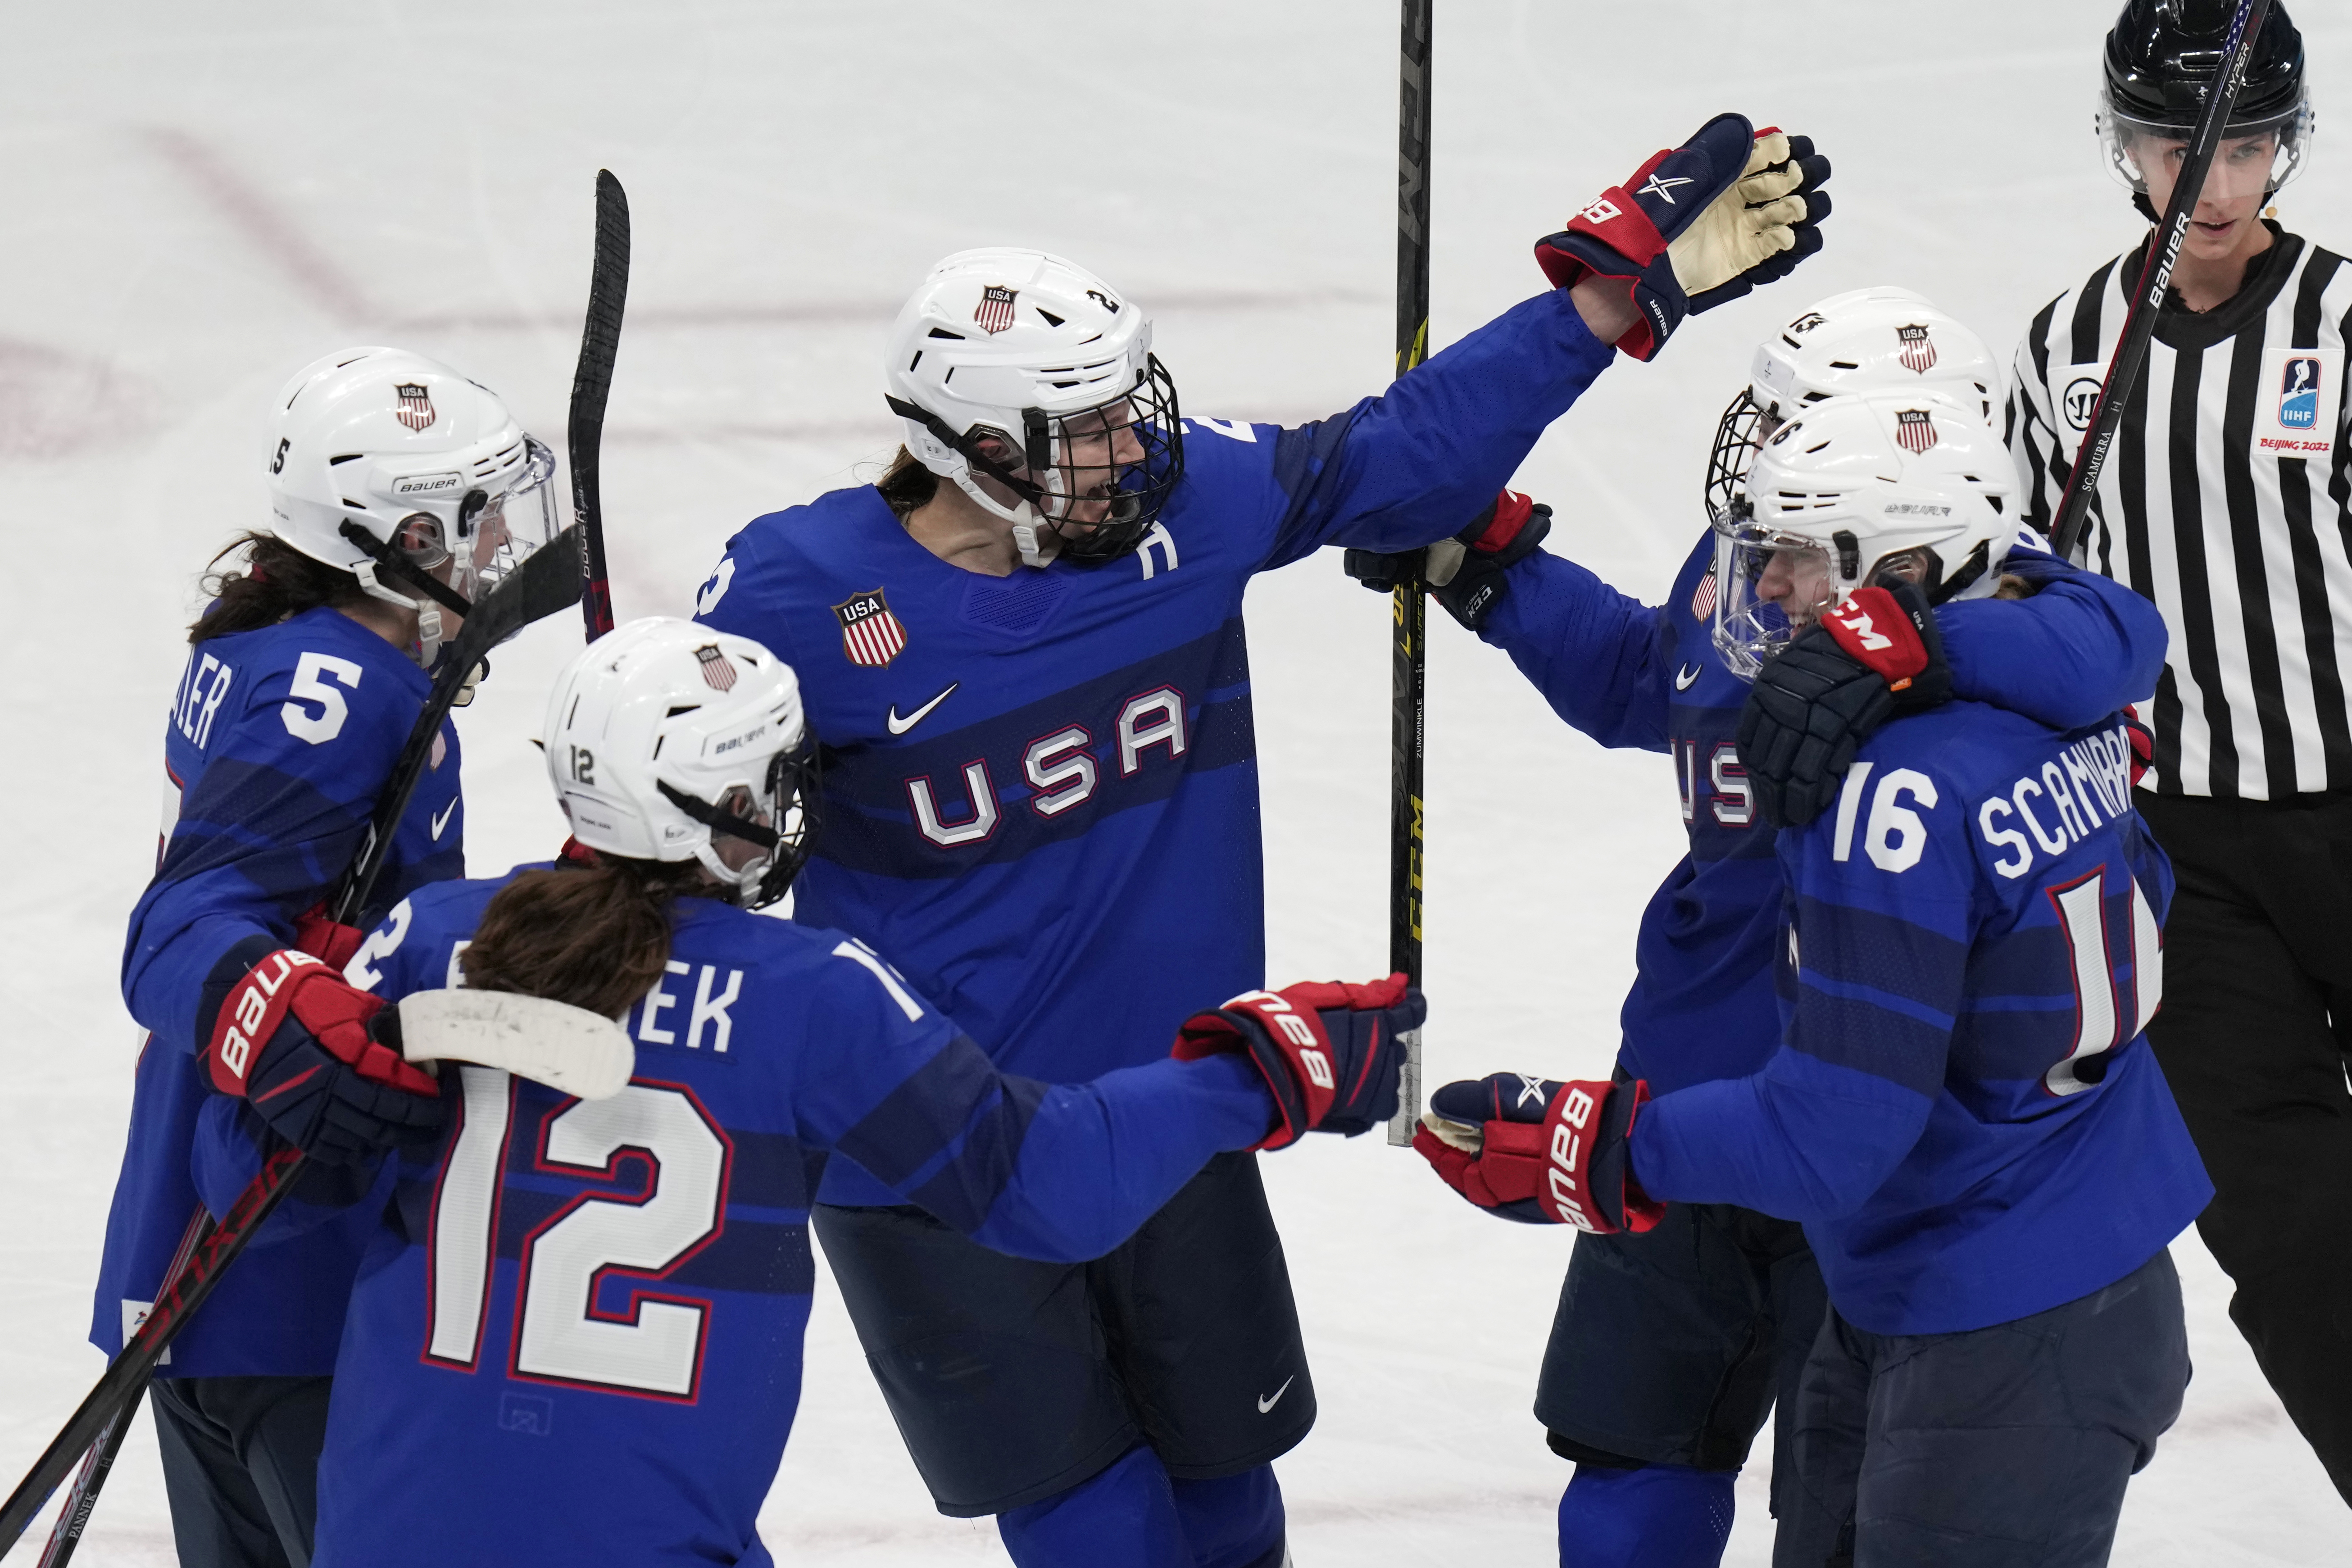 USA upset defending champions Finland to open men's ice hockey